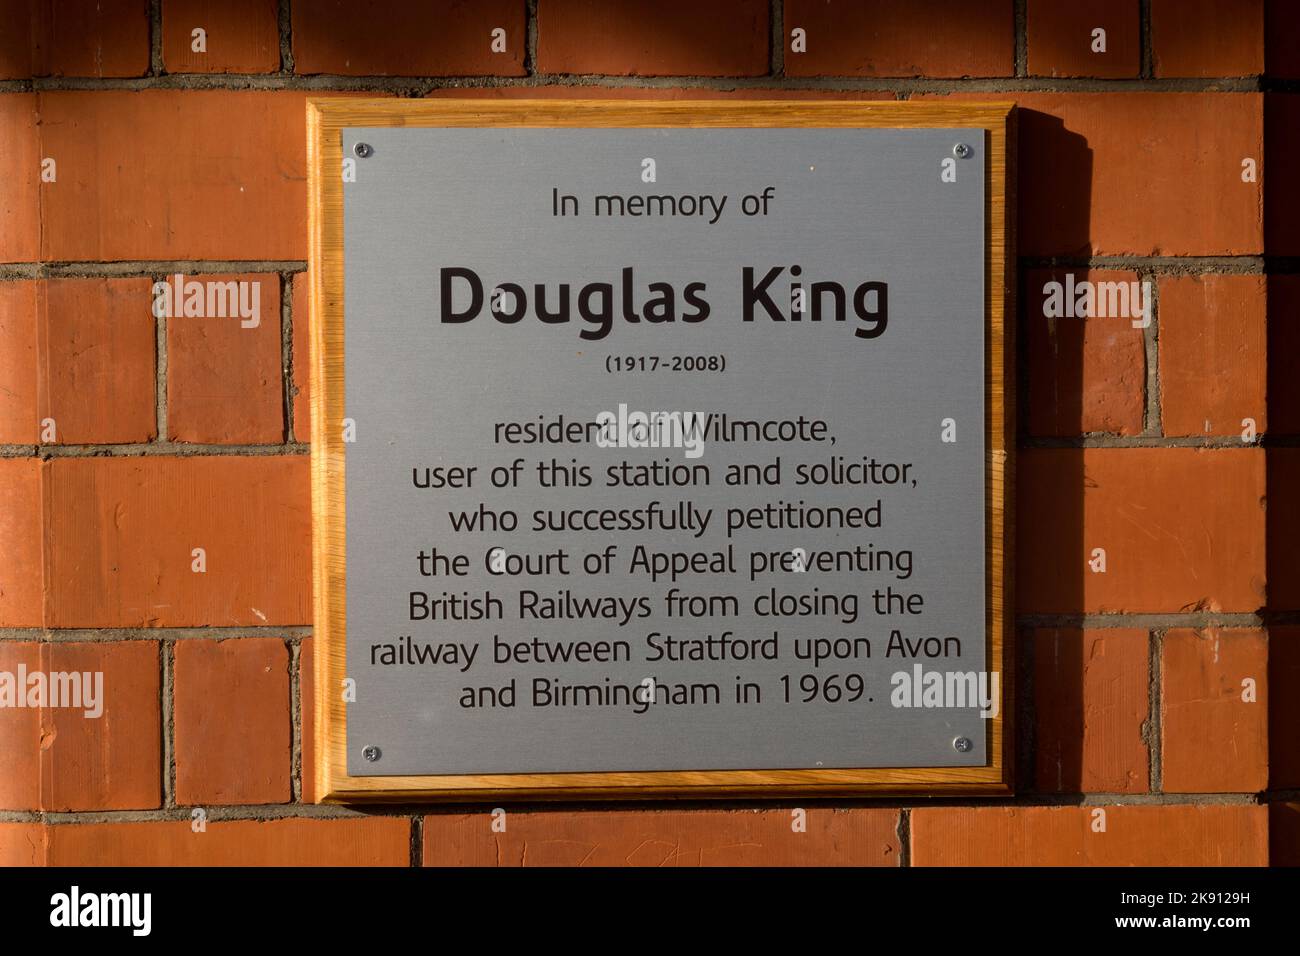 Douglas King memorial plaque, Wilmcote railway station, Warwickshire, England, UK Stock Photo